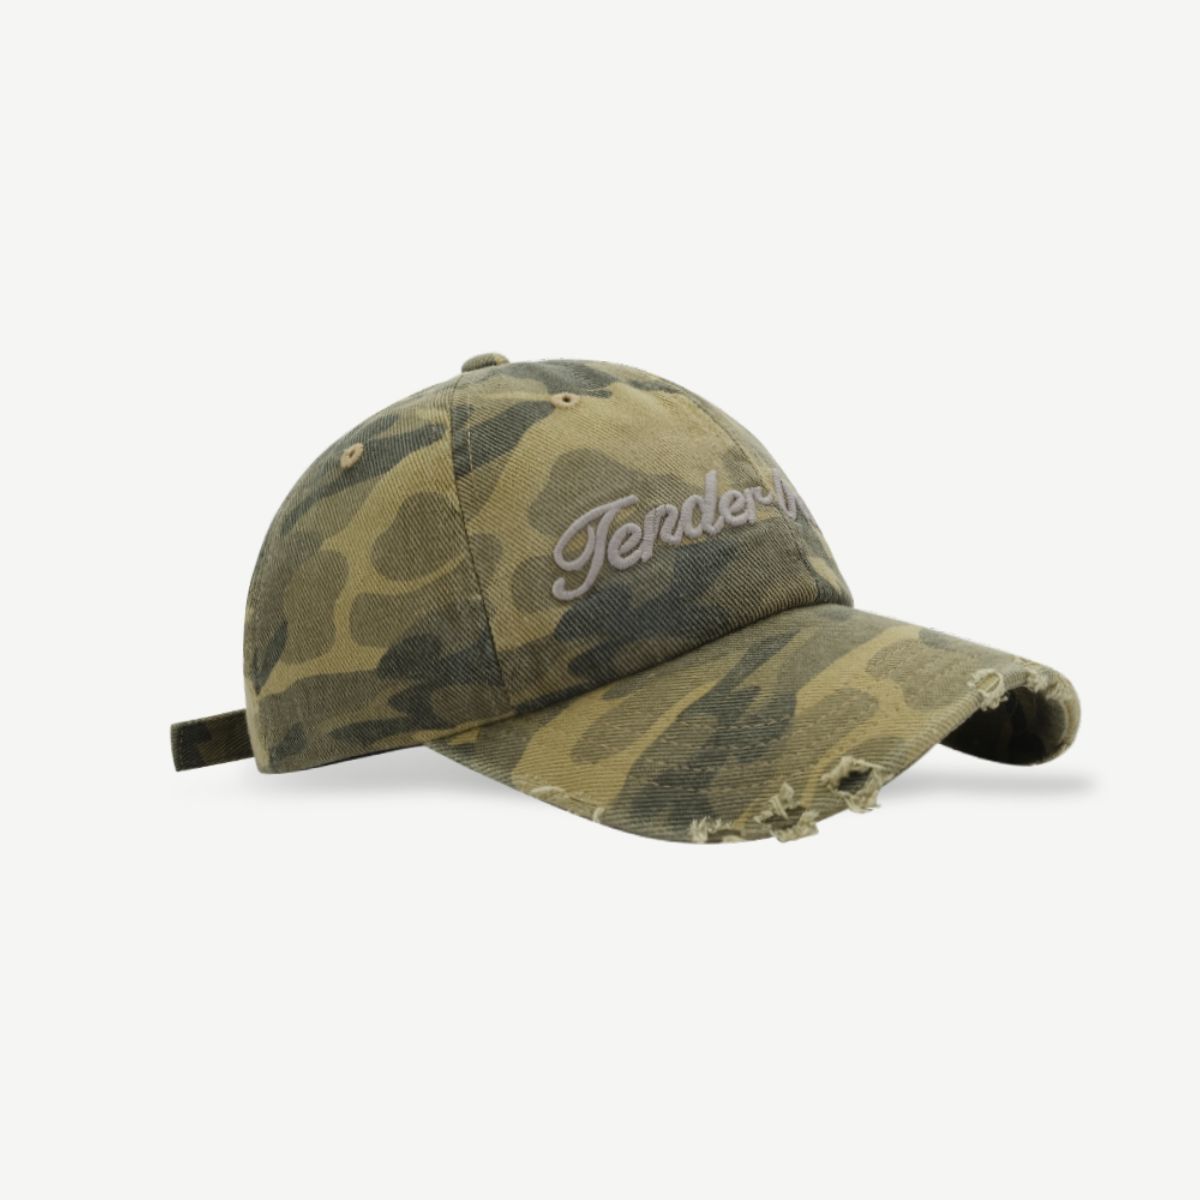 TEEK - Letter Graphic Camouflage Cotton Hat HAT TEEK Trend   